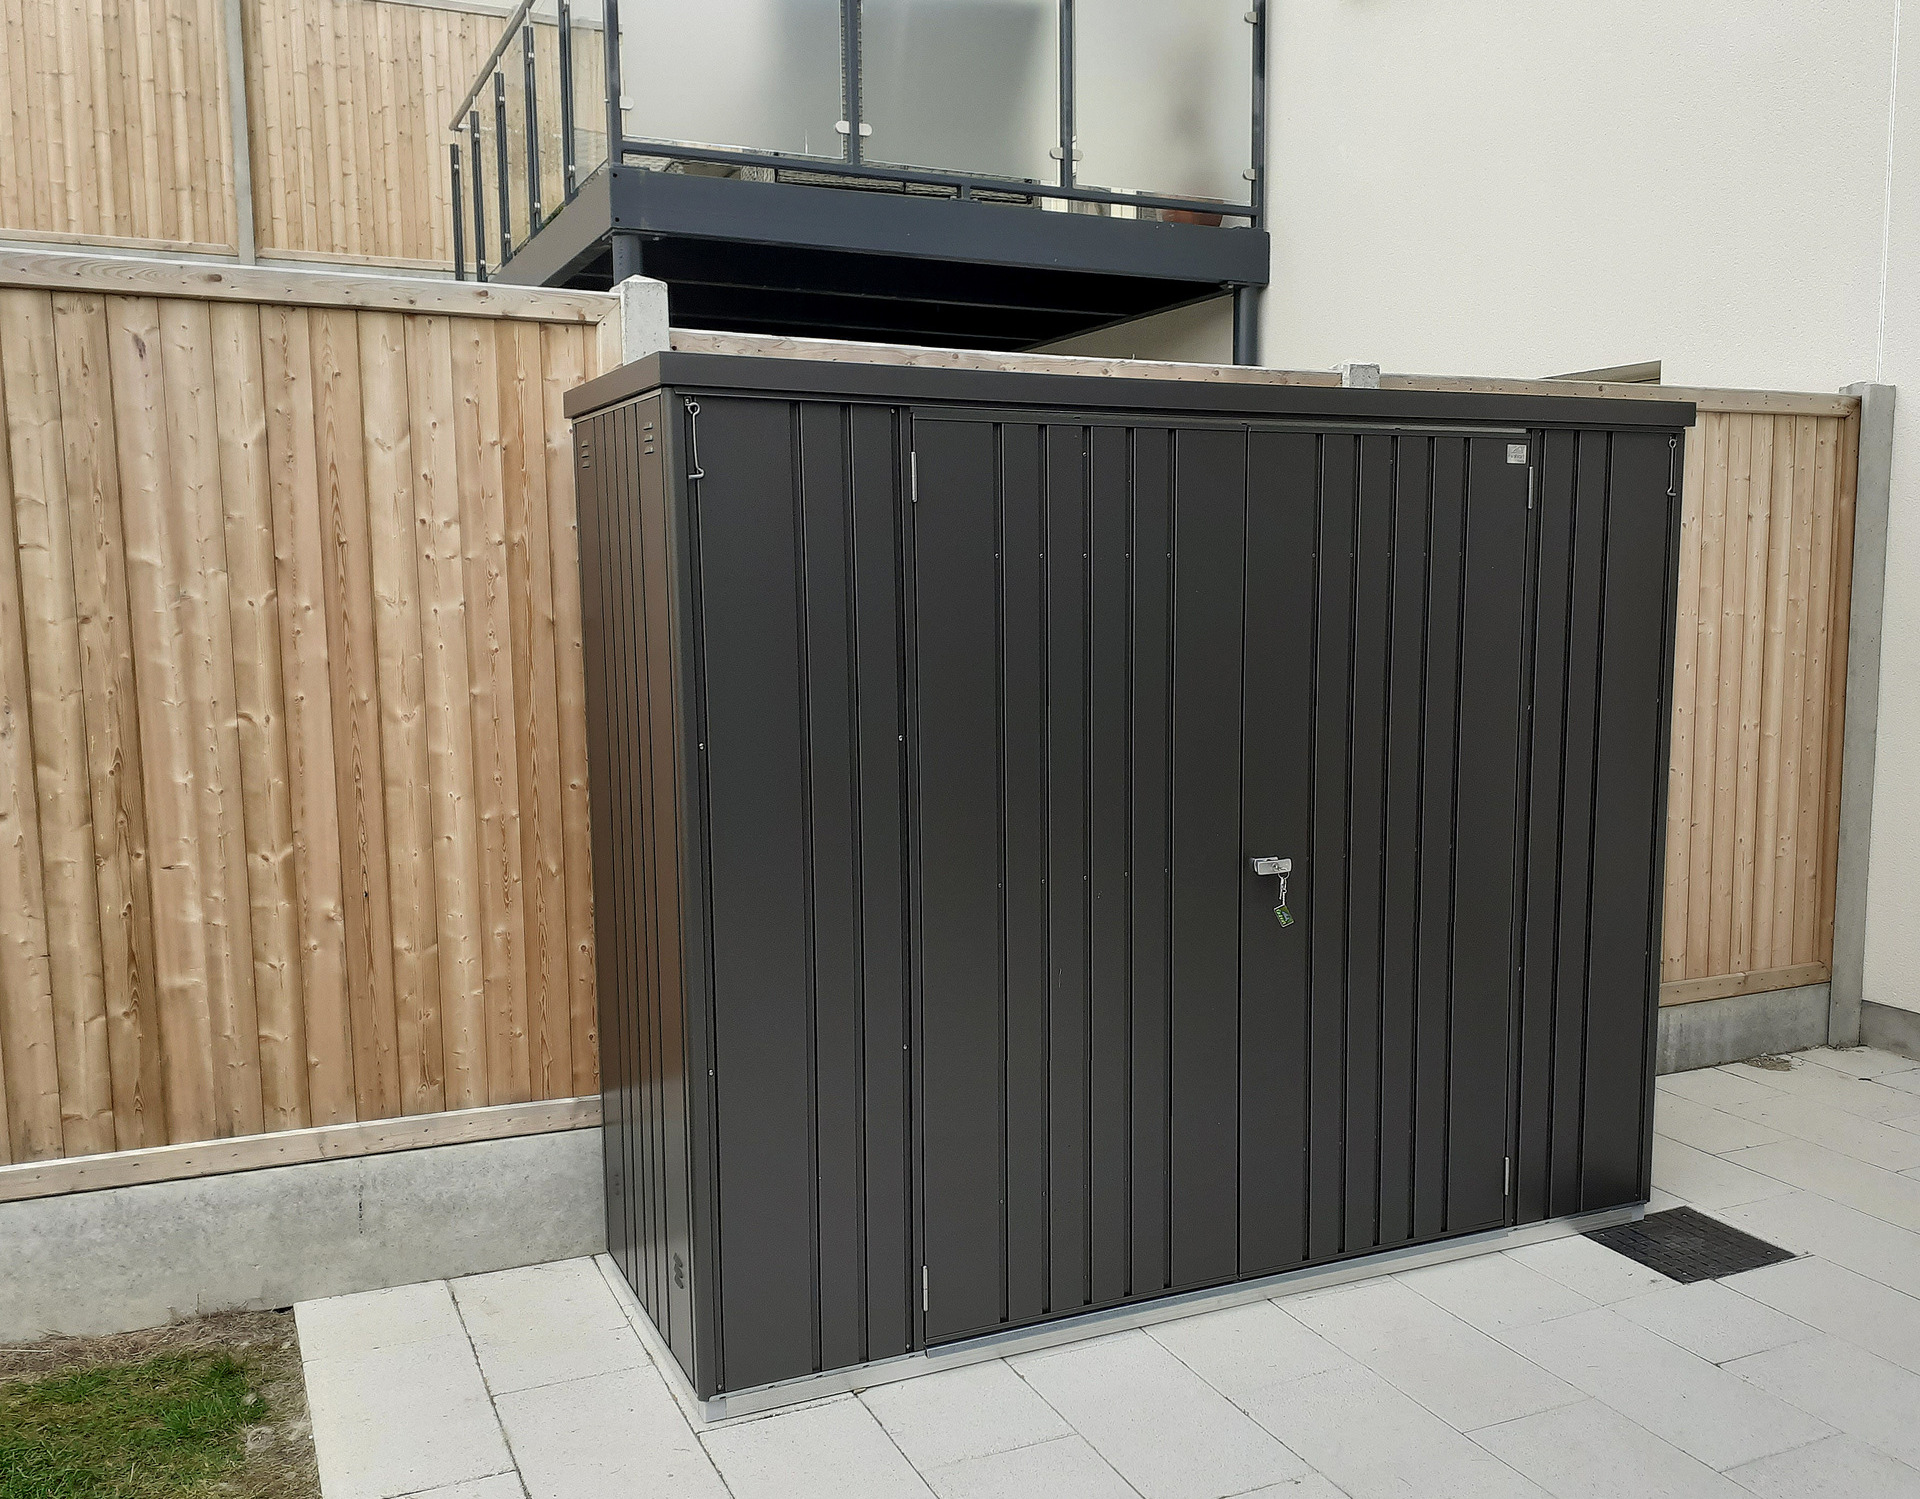 Biohort Equipment Locker 230 in metallic dark grey, supplied + fitted in Naas, Co Kildare | Stylish, Versatile, Secure & Rainproof Patio Storage Solutions | FREE Fitting